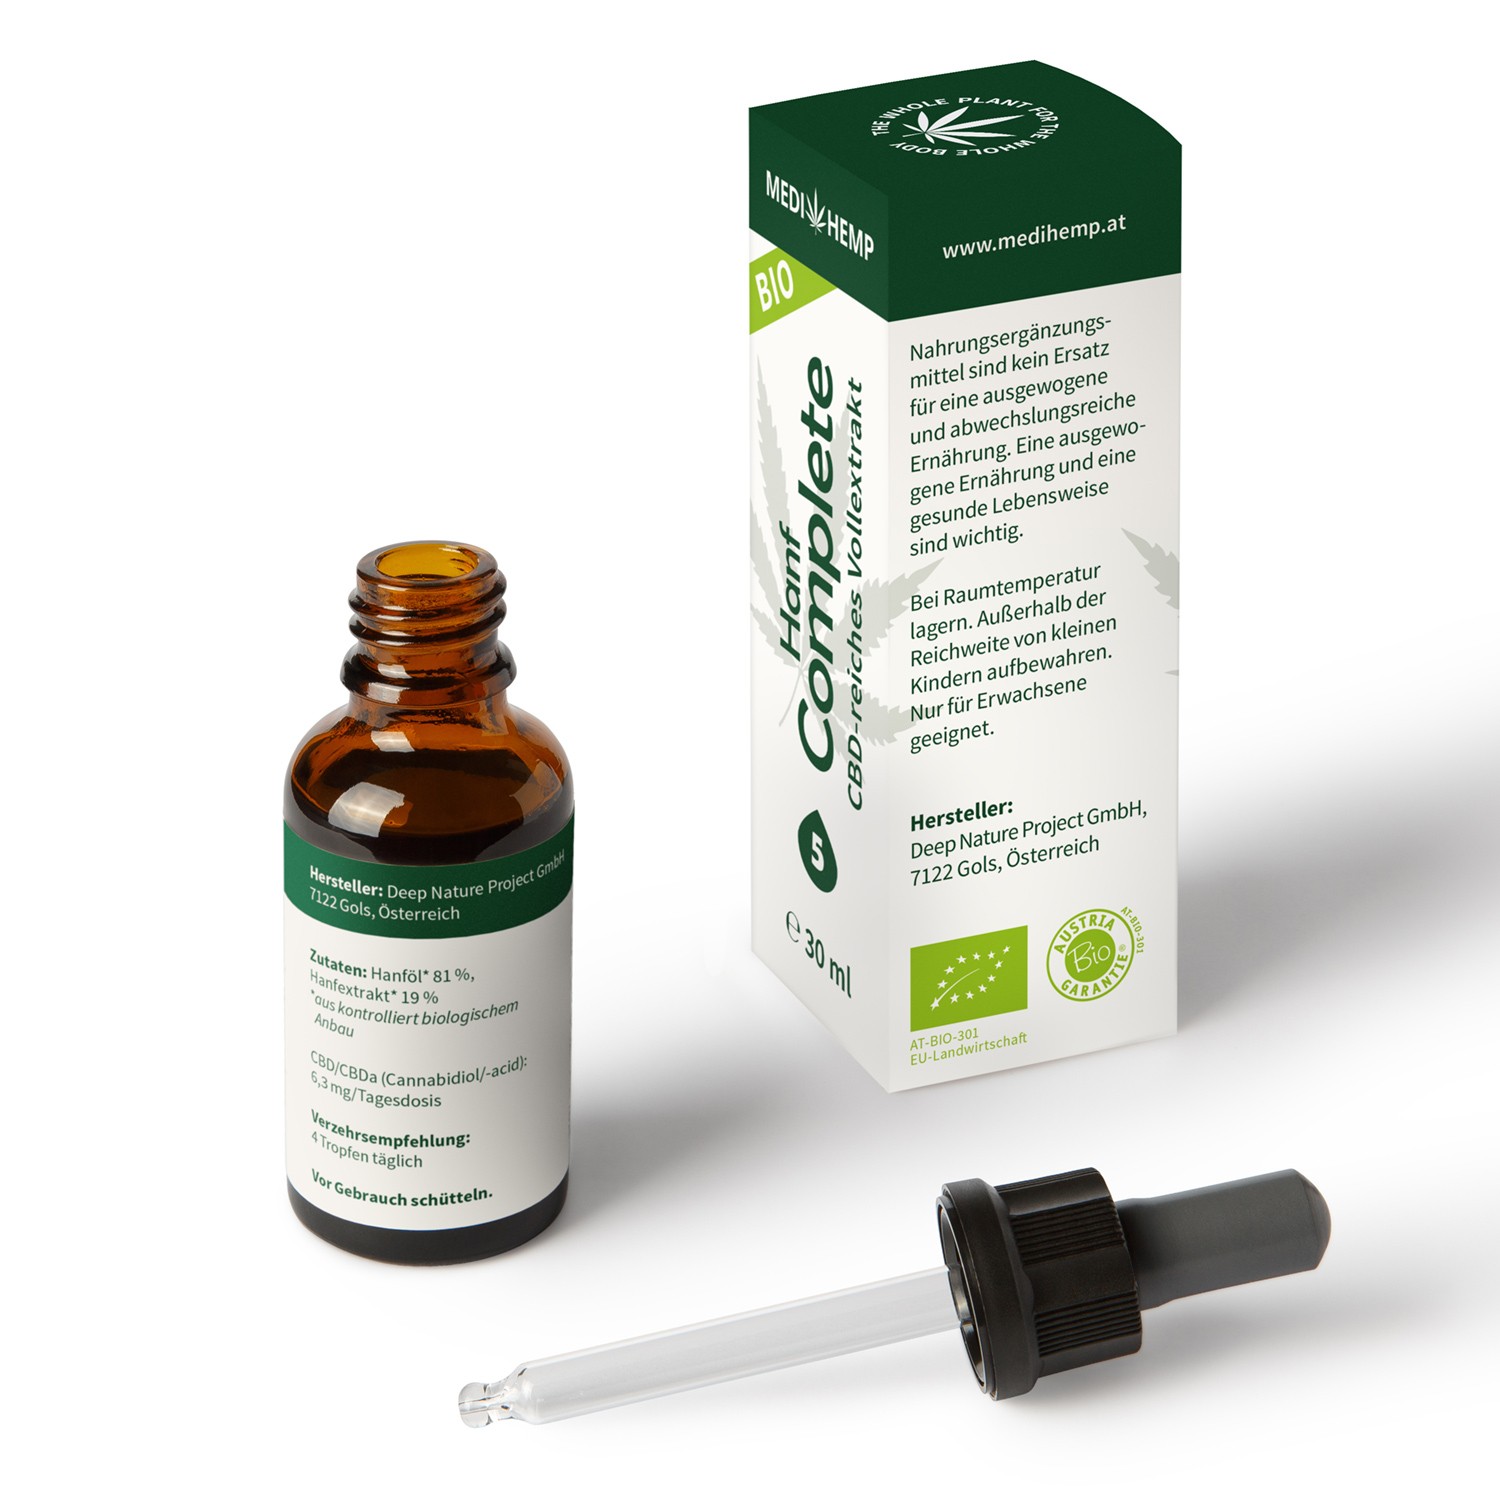 Medihemp Bio Hanf Complete Öl - 5 % - 30ml - 1500 mg CBD Aromaöl